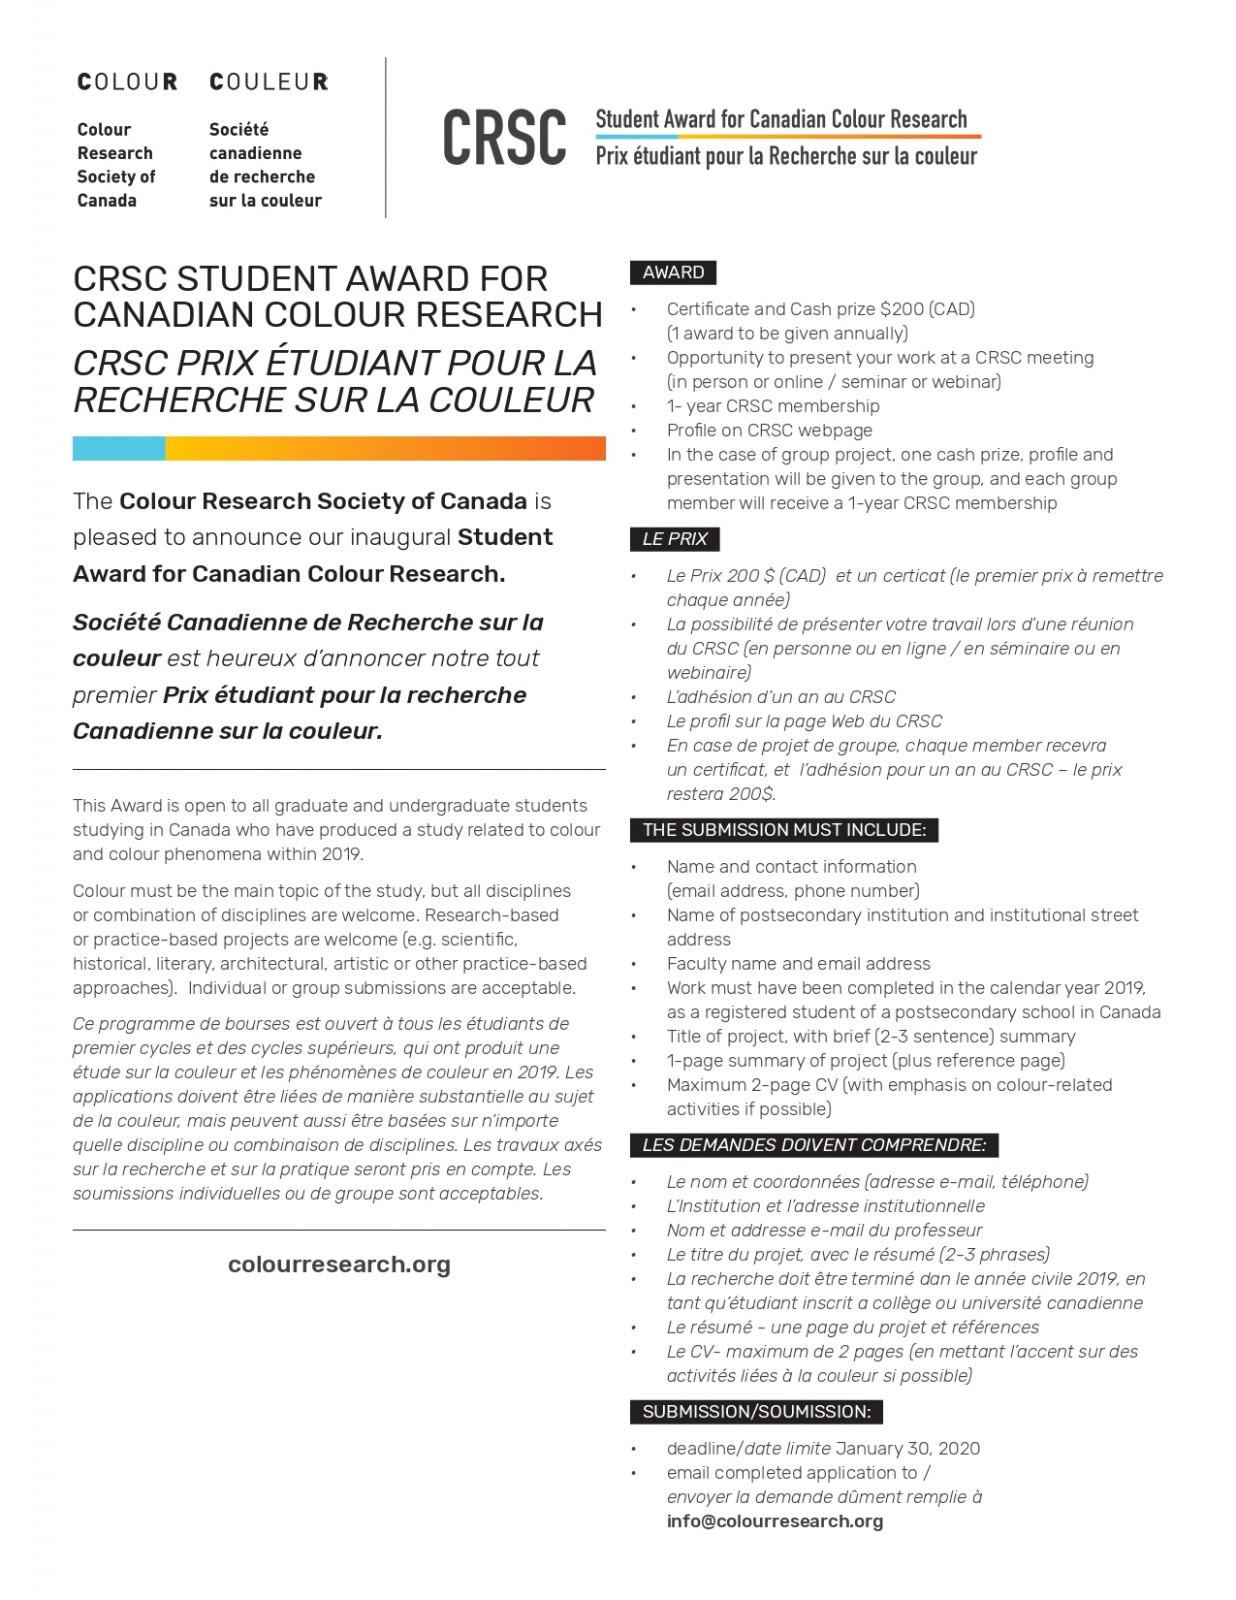 CRSC Student Award Info